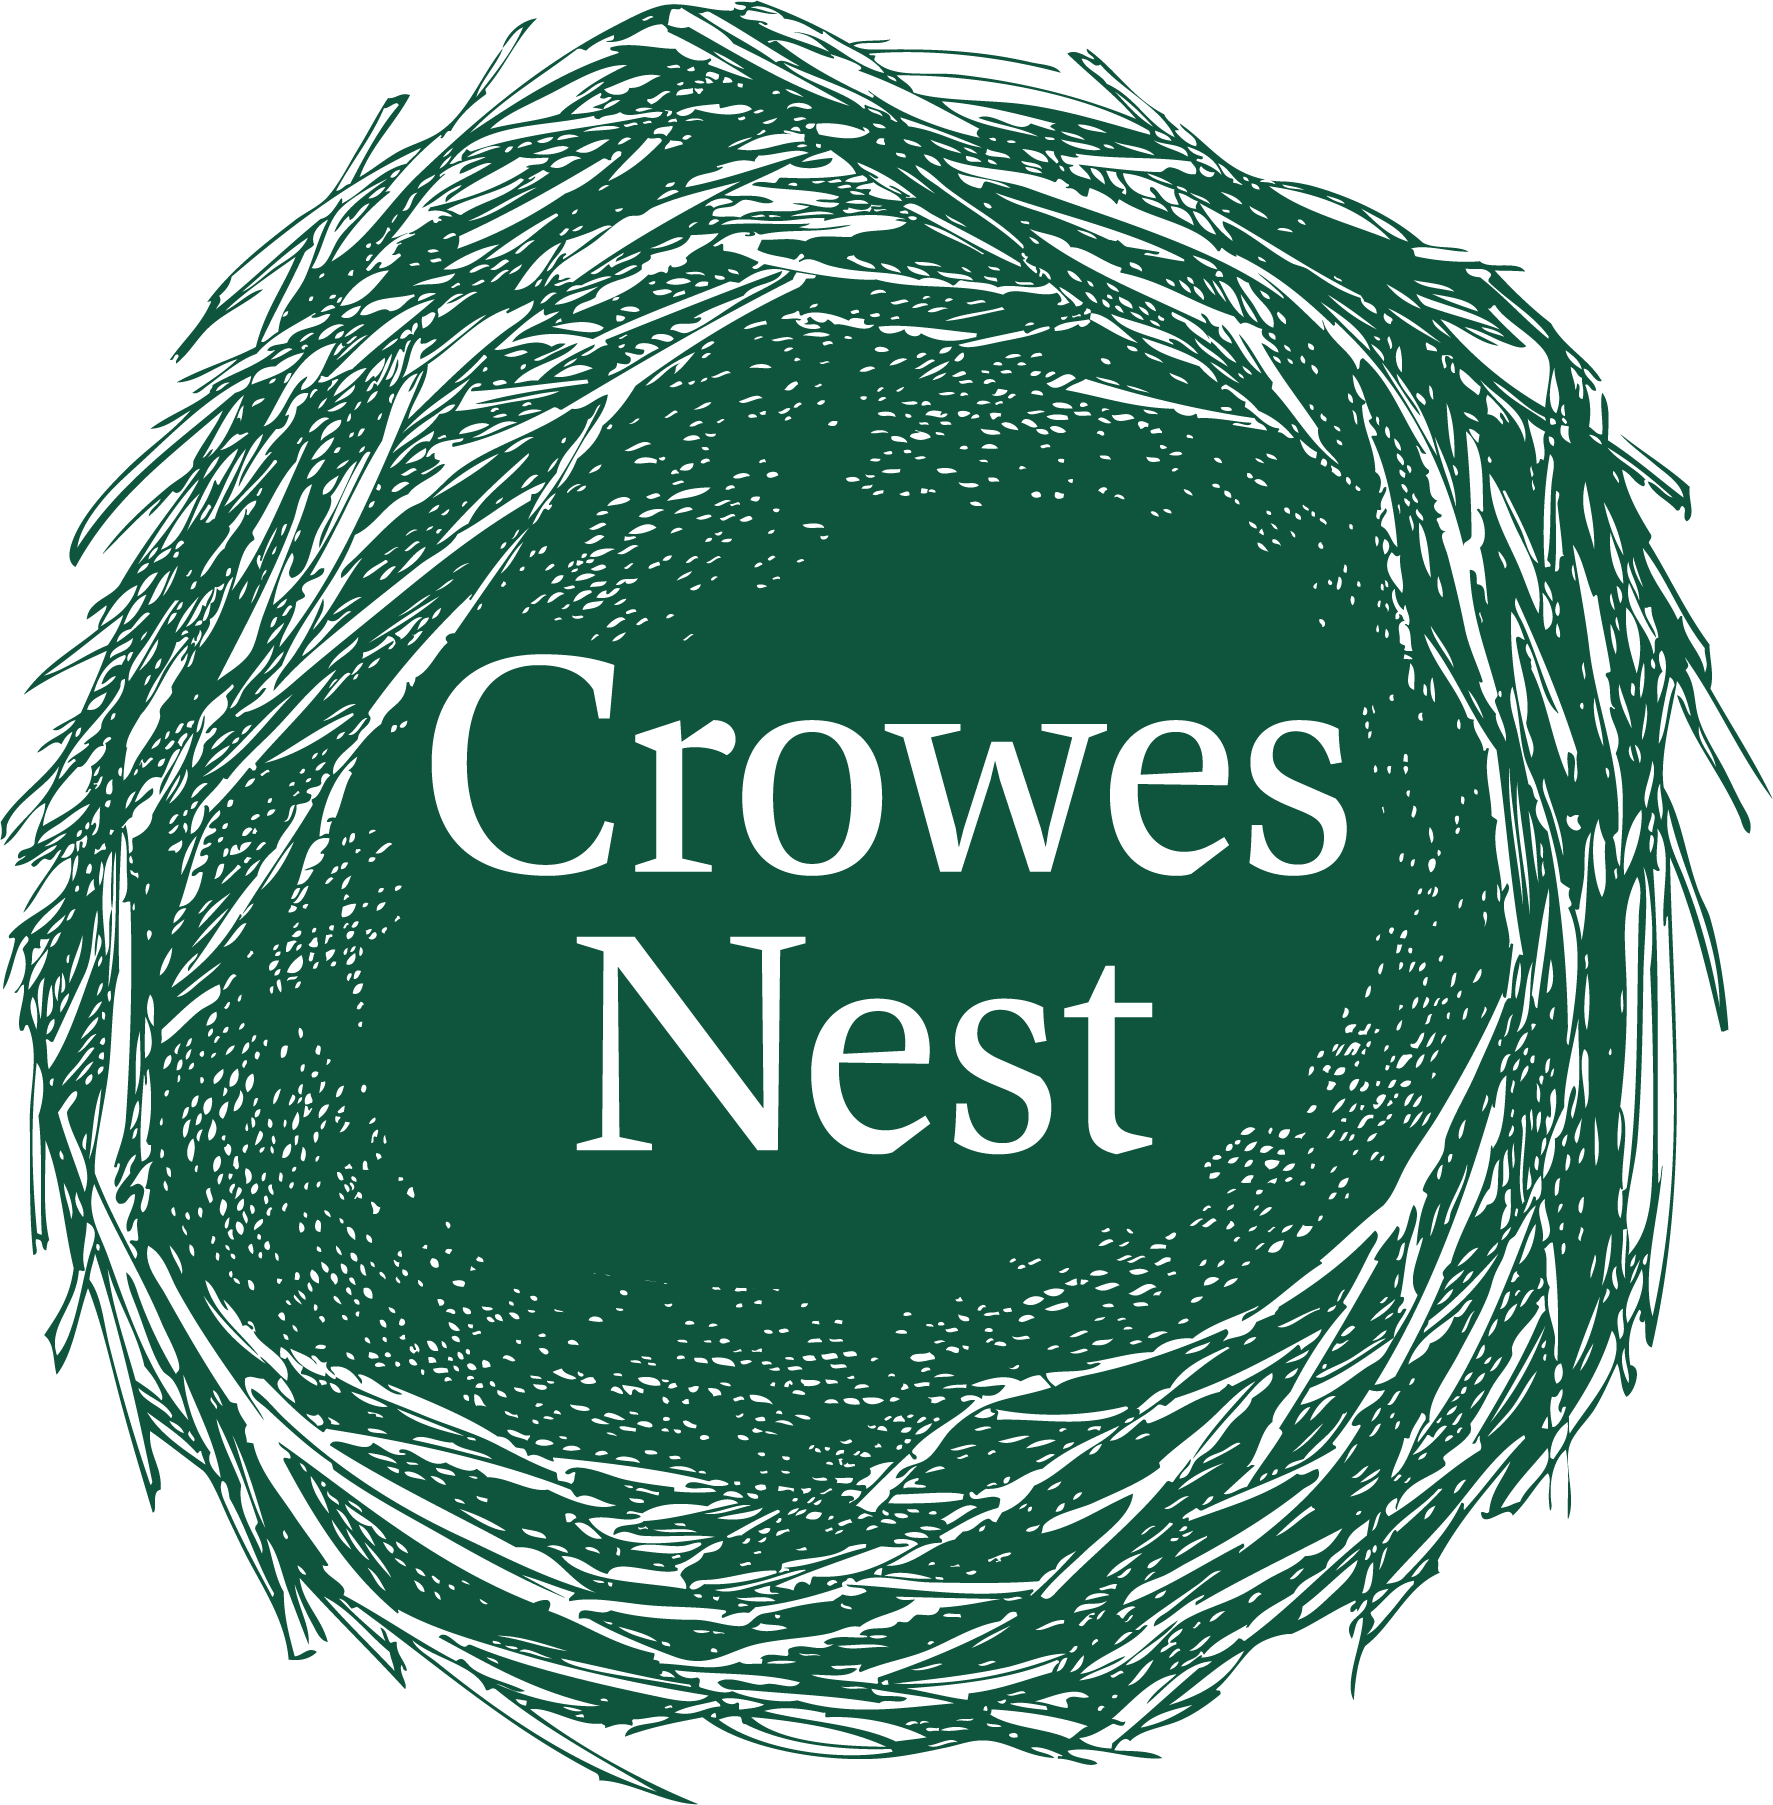 Crowe's Nest